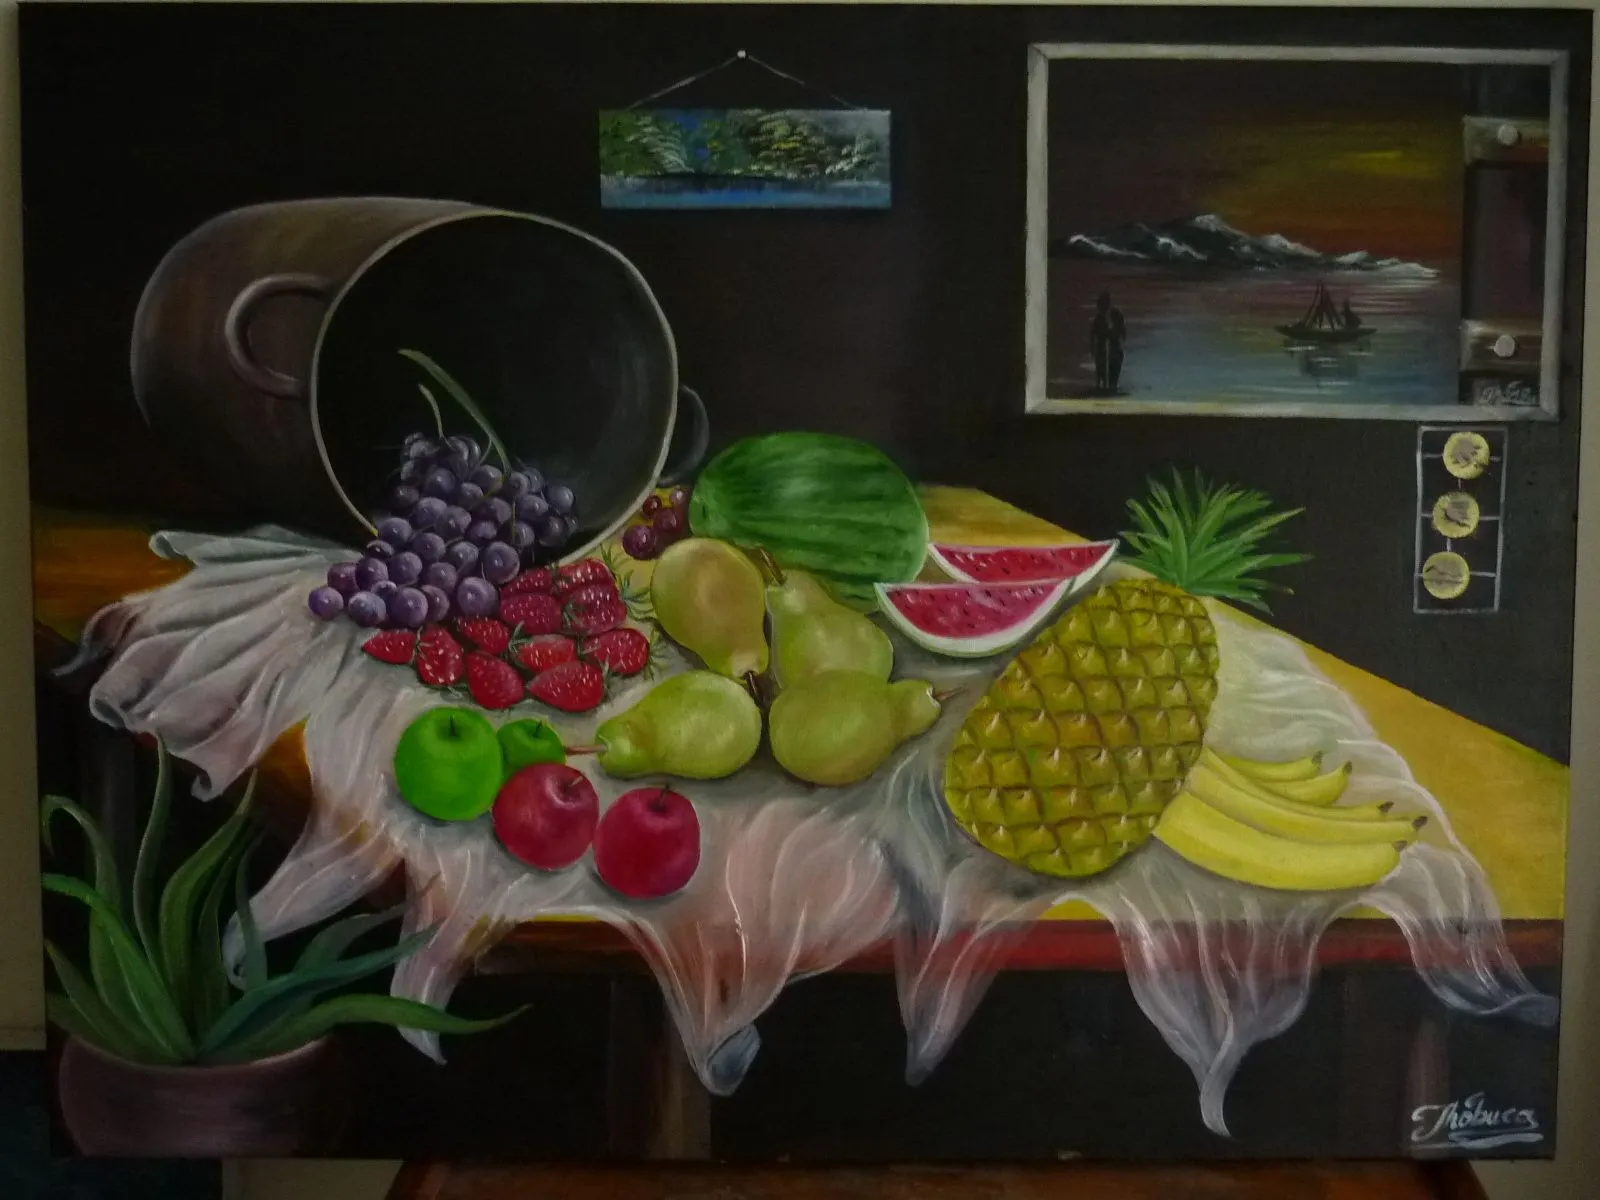 Pinturas de fruteros al oleo - Imagui